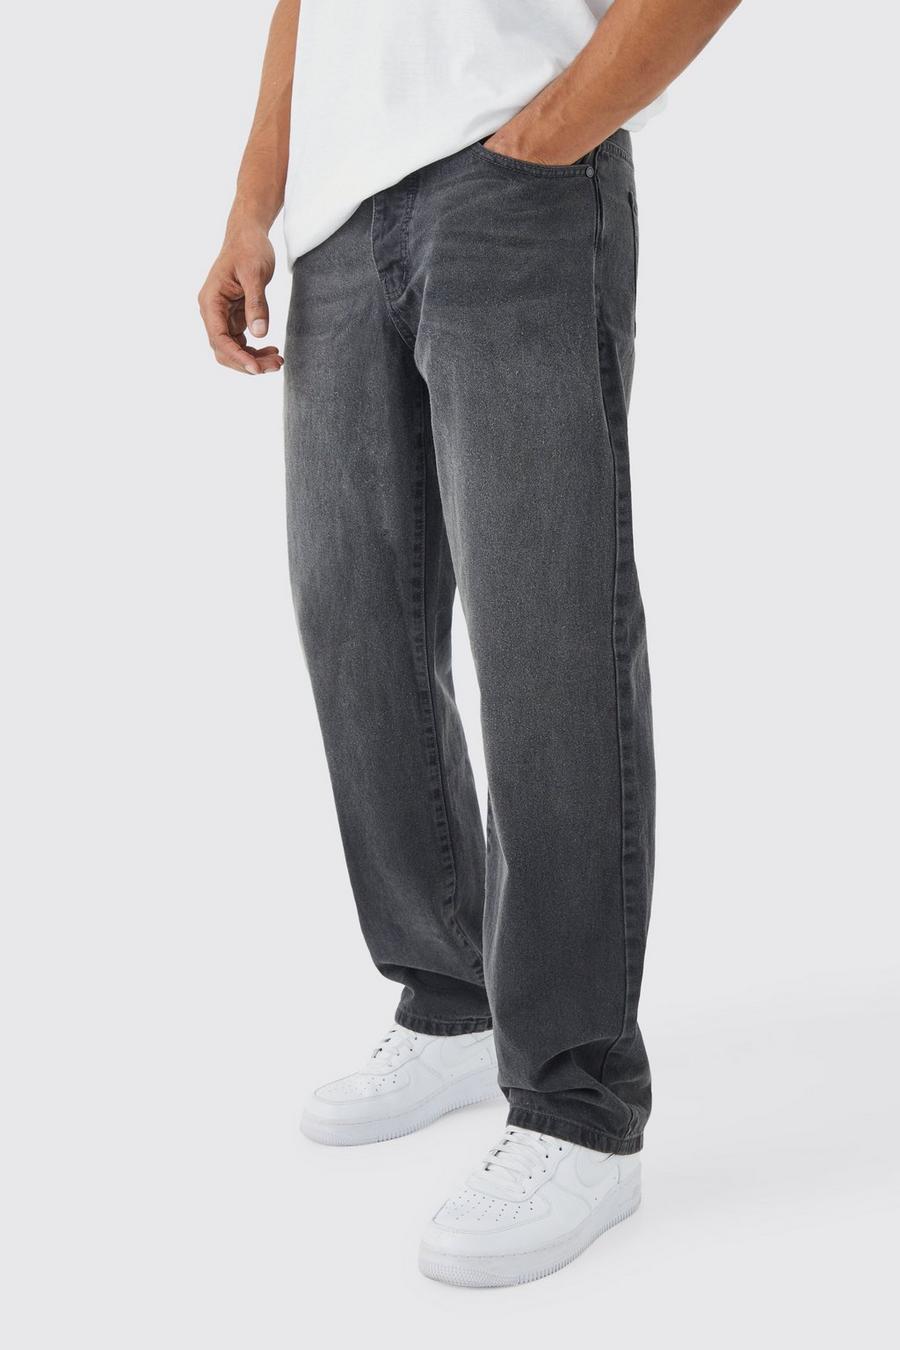 Lockere Jeans, Charcoal grey